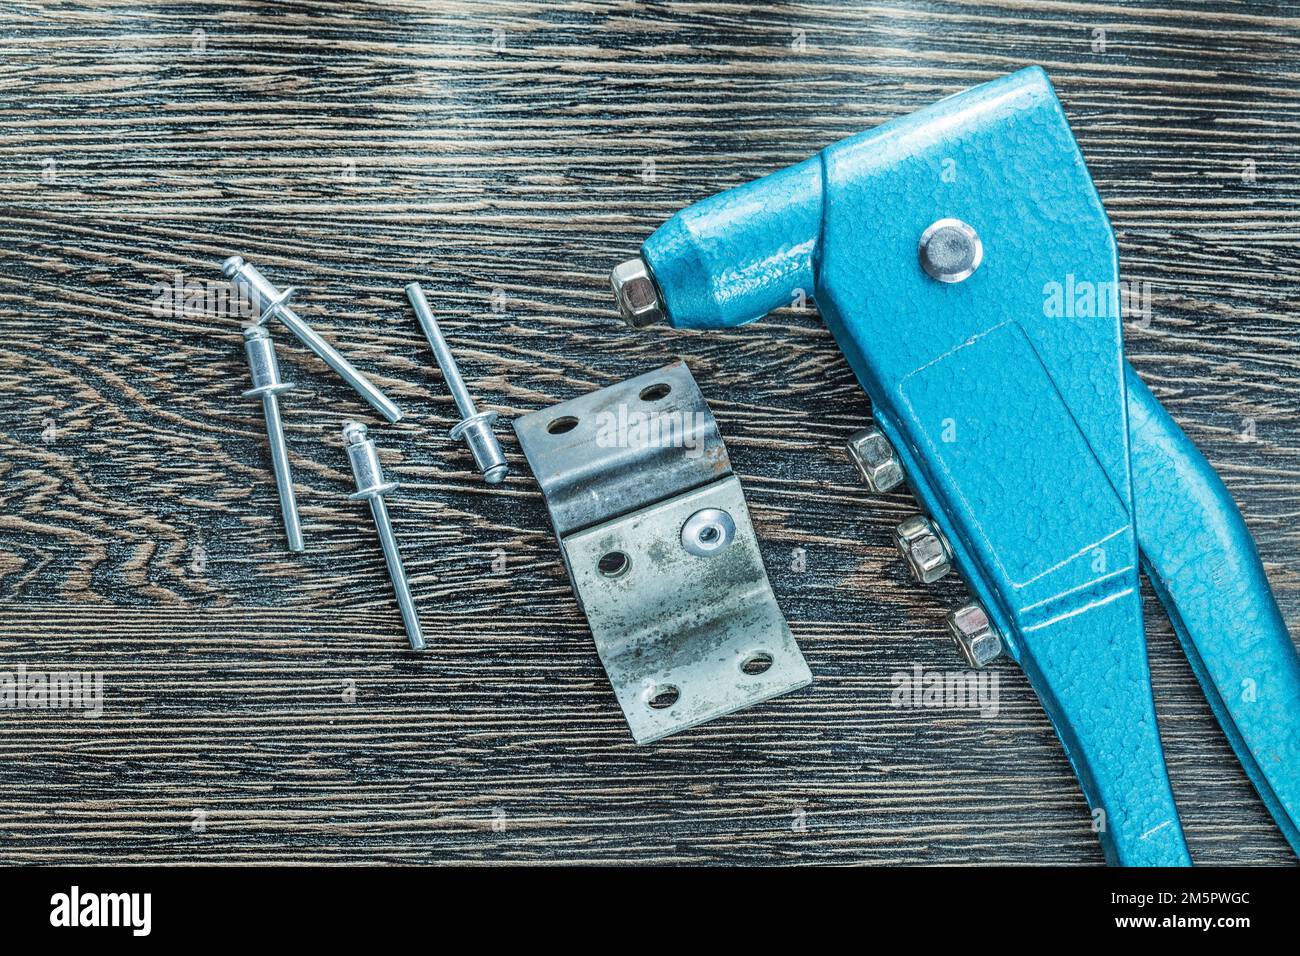 Riveting pliers rivets screws on wooden board. Stock Photo